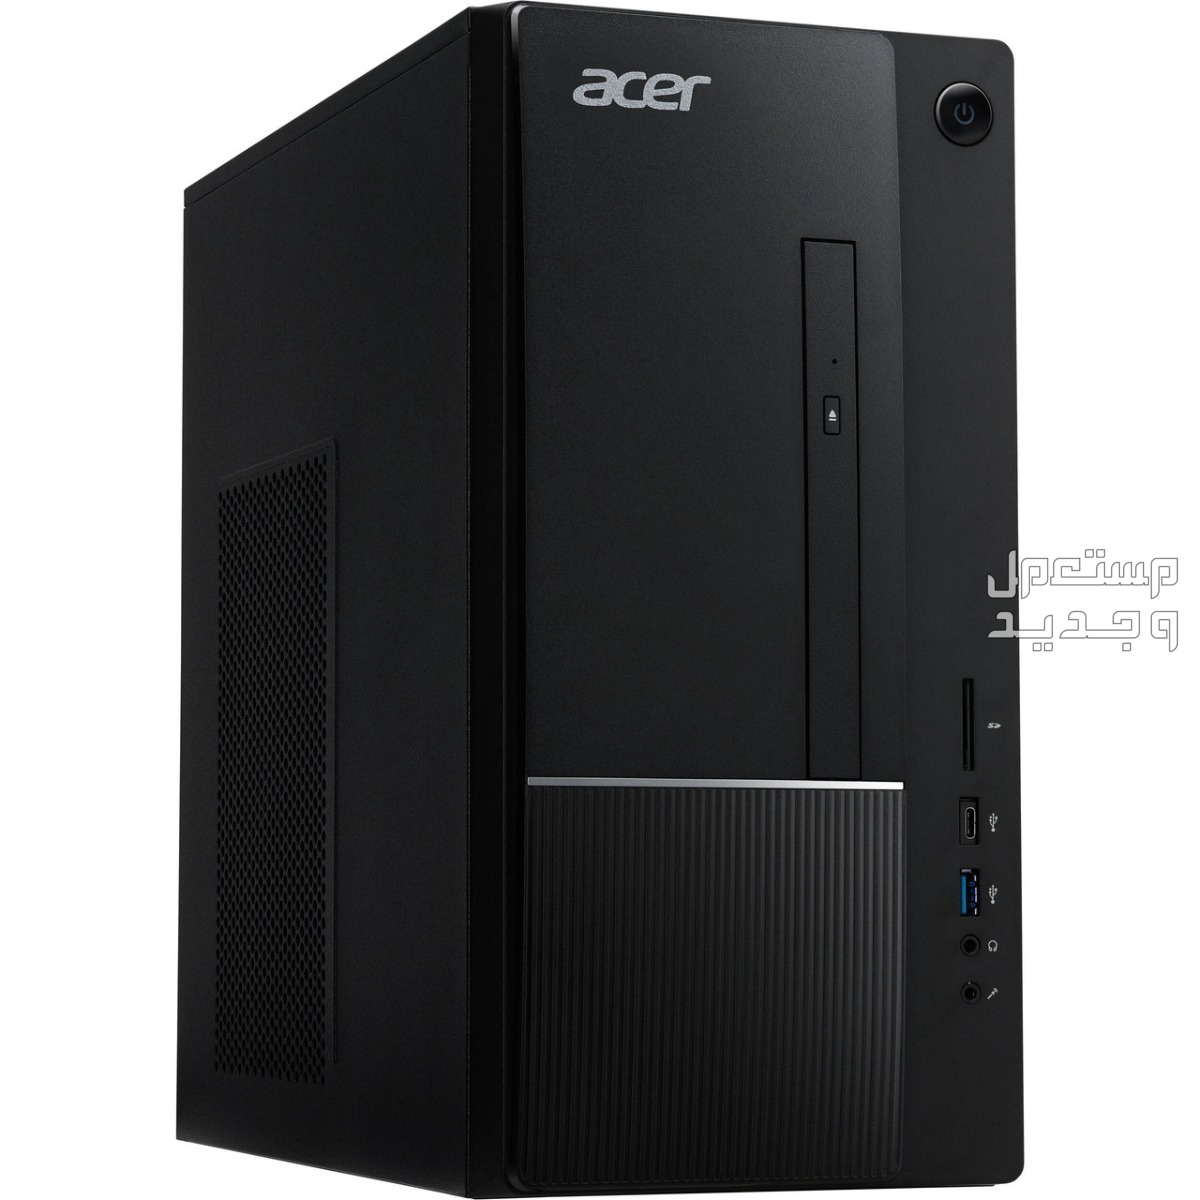 تعرف على جهاز كمبيوتر مكتبي Acer Aspire TC-885-UA91 في مصر Acer Aspire TC-885-UA91